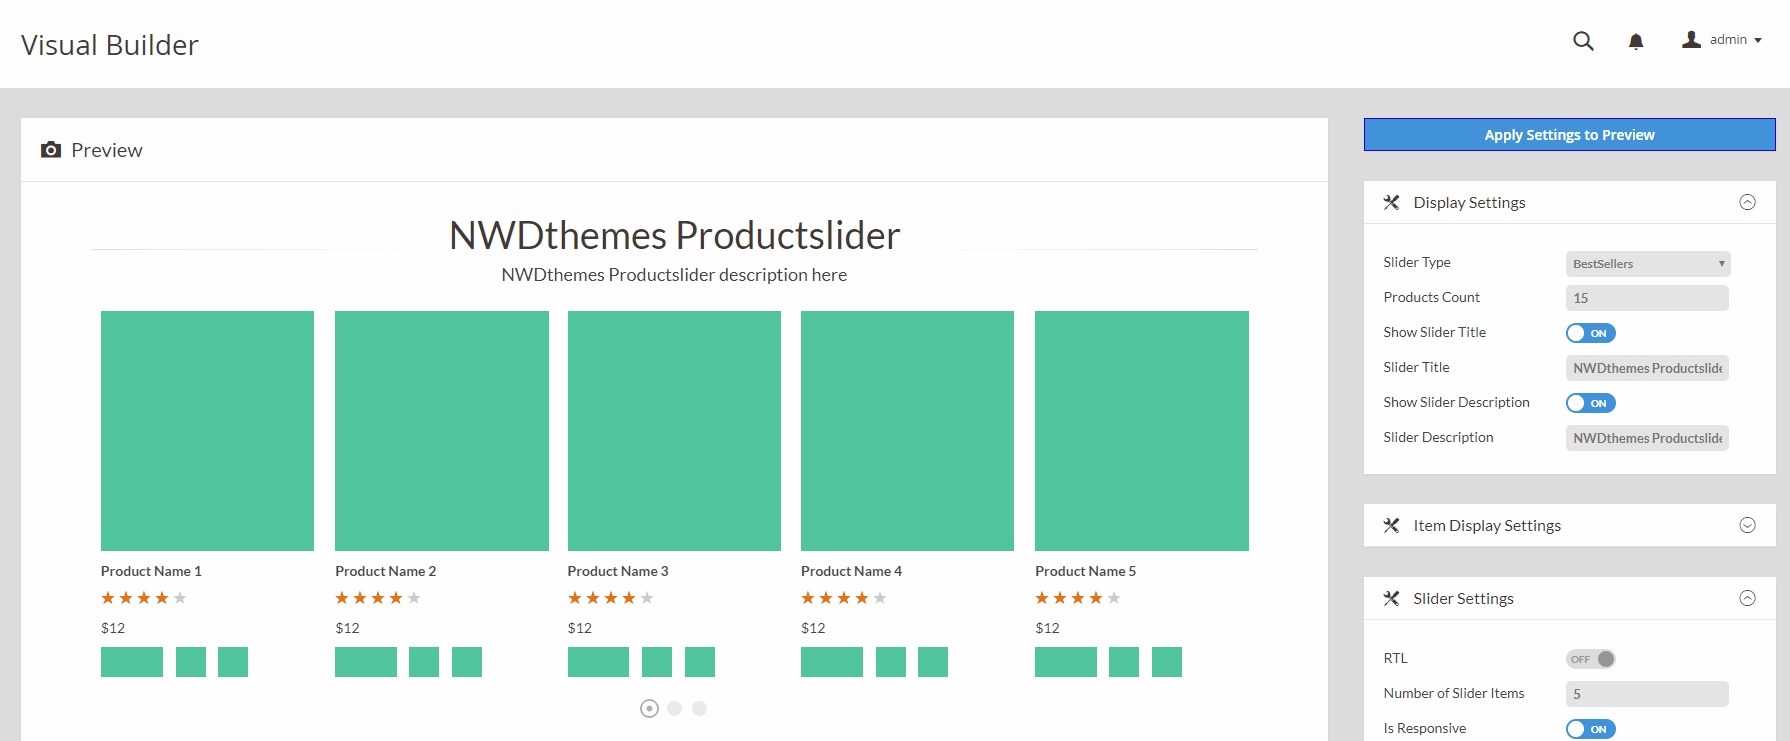 Visual Builder for Product Slider